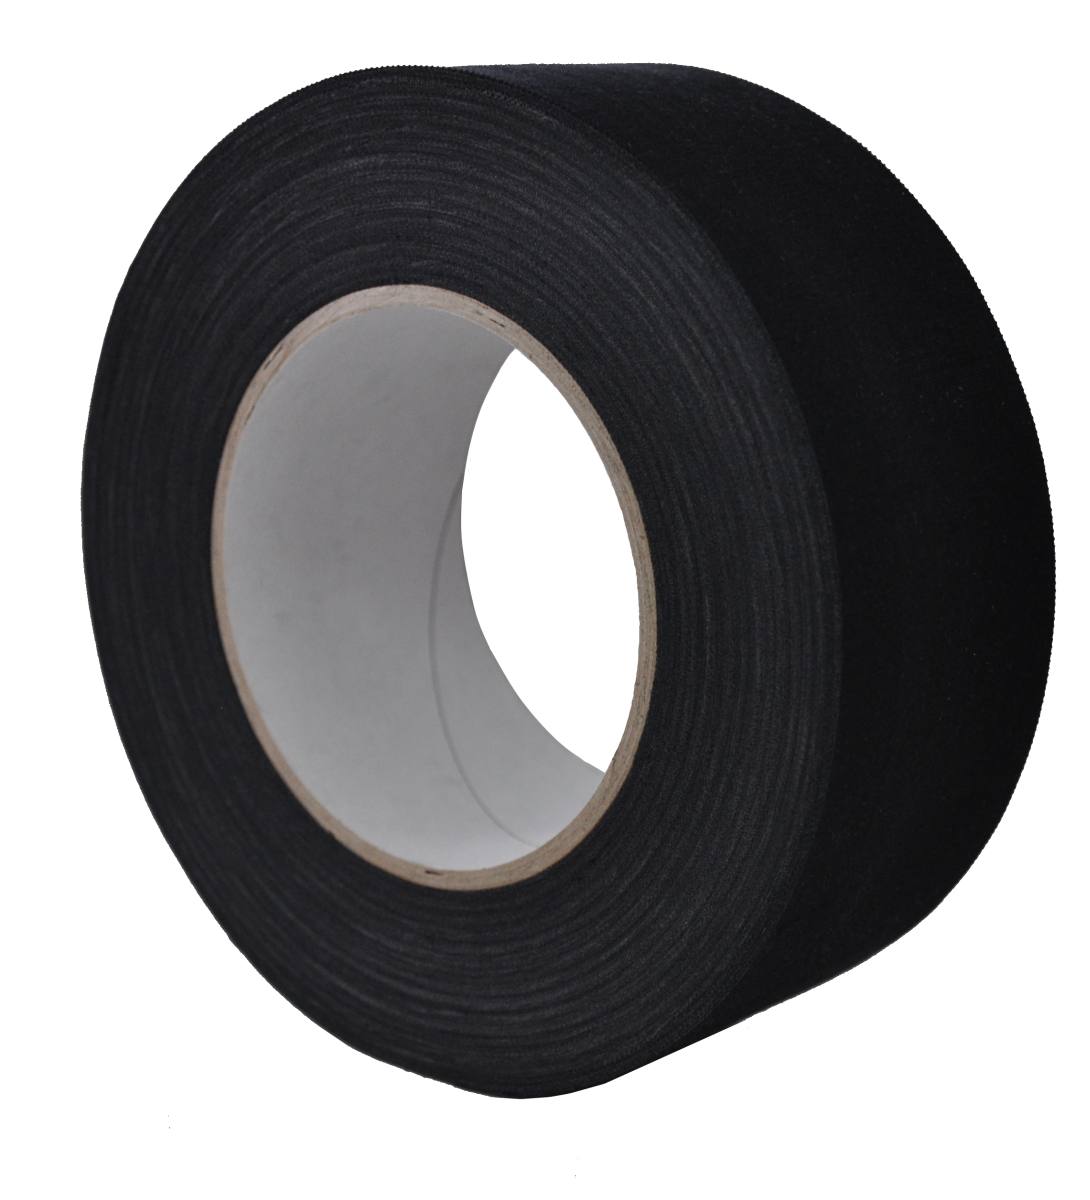 S-K-S 970 Raw fabric adhesive tape, 25 mm x 50 m, black, 0.240 mm